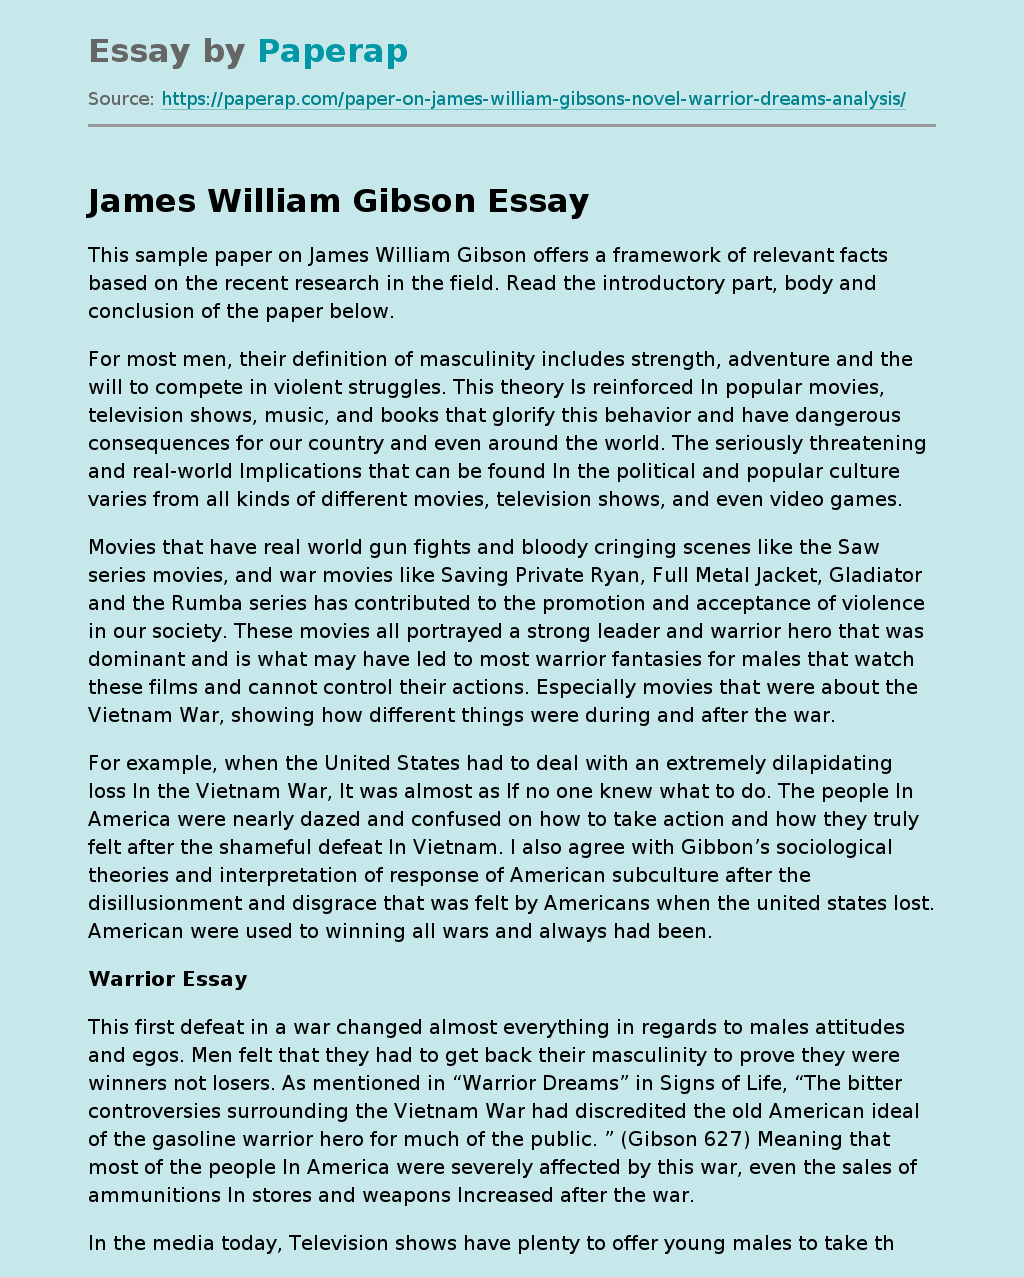 James William Gibson